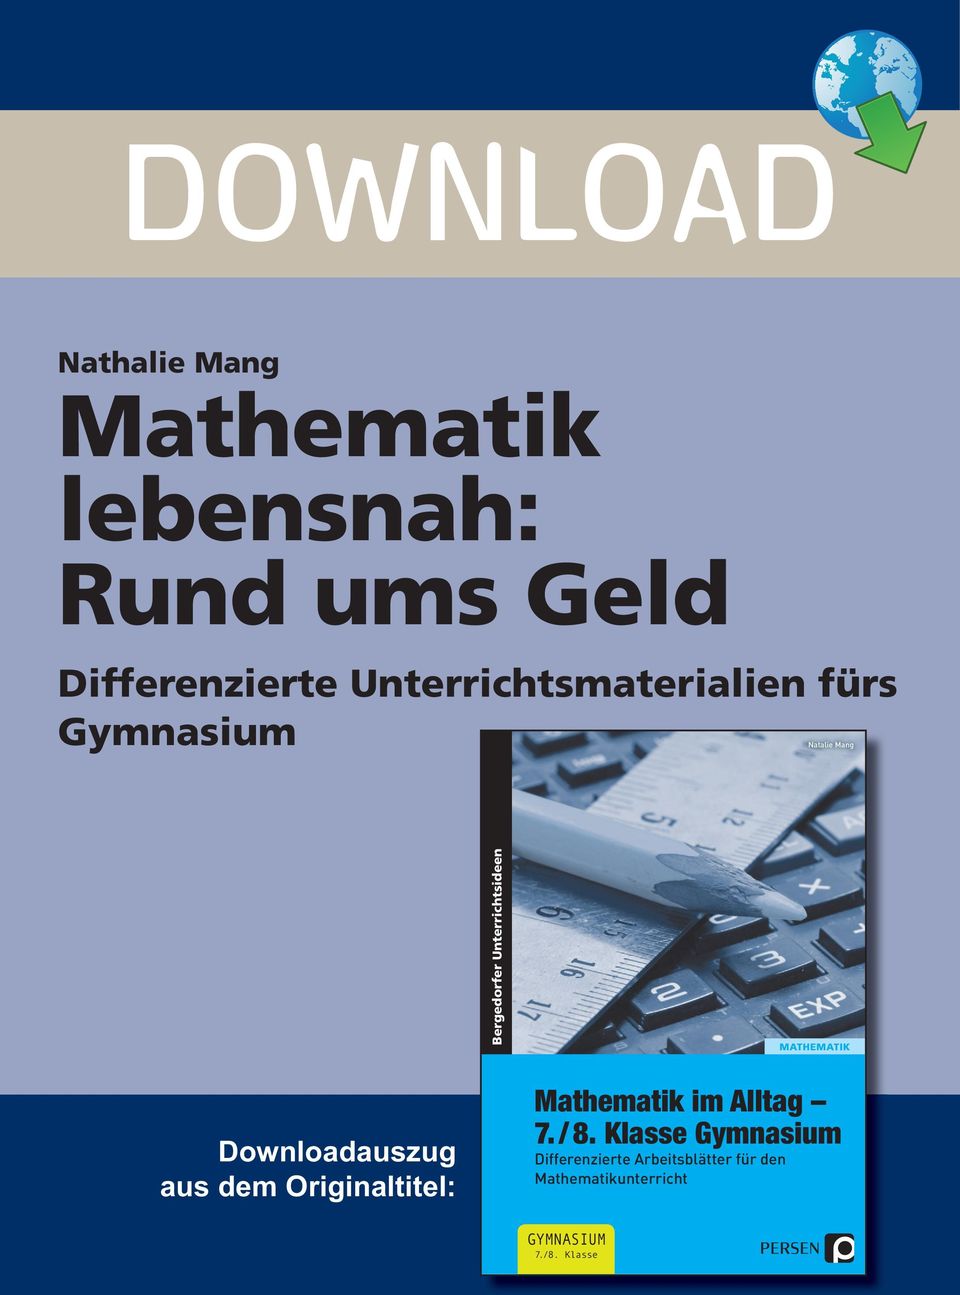 MATHEMATIK Downloadauszug aus dem Originaltitel: Mathematik im Alltag 7. / 8.